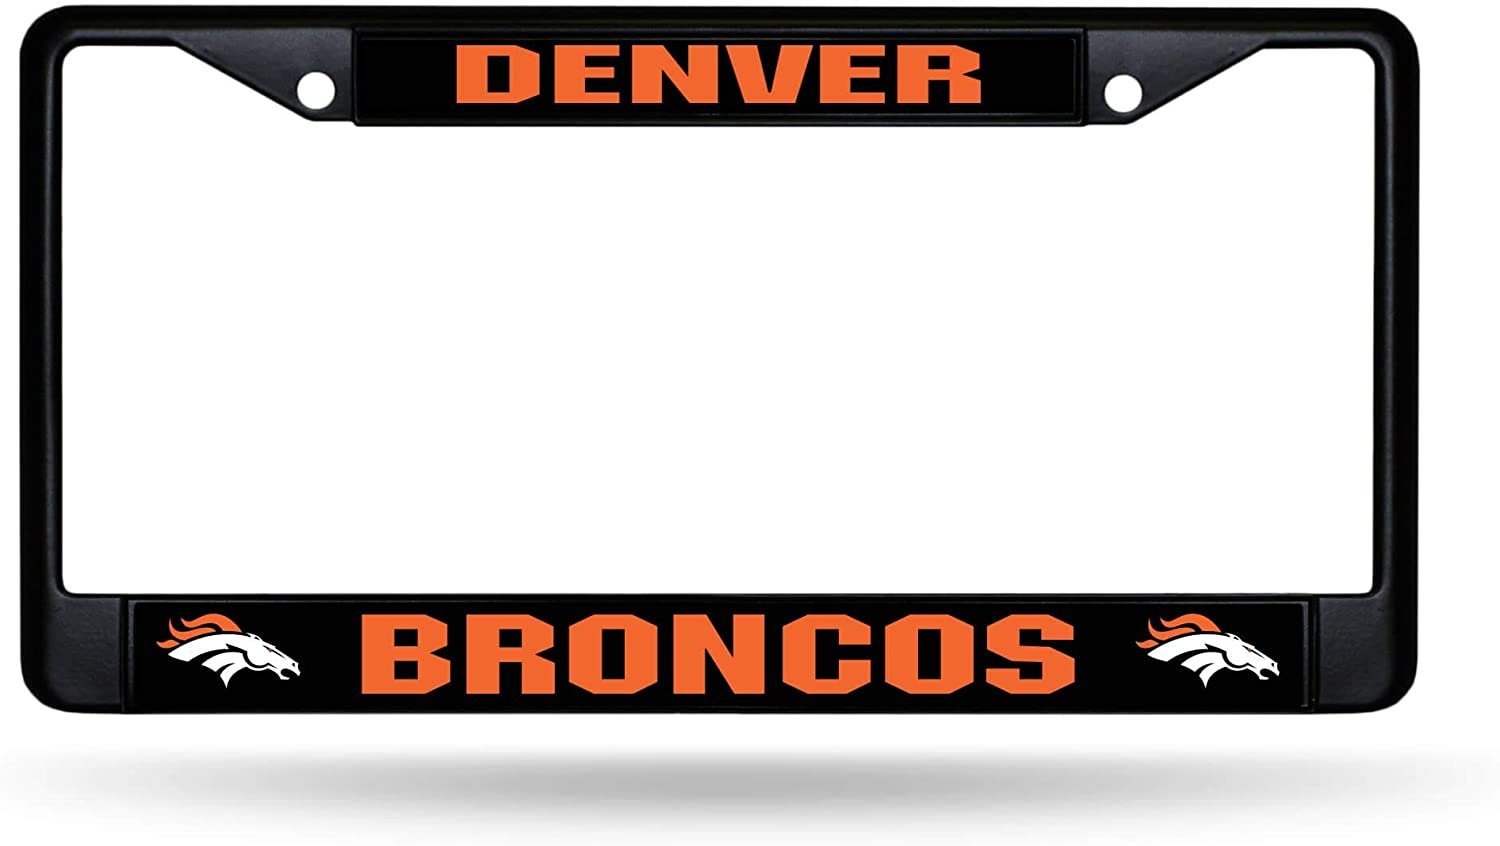 Denver Broncos Black Metal License Plate Frame Chrome Tag Cover 6x12 Inch